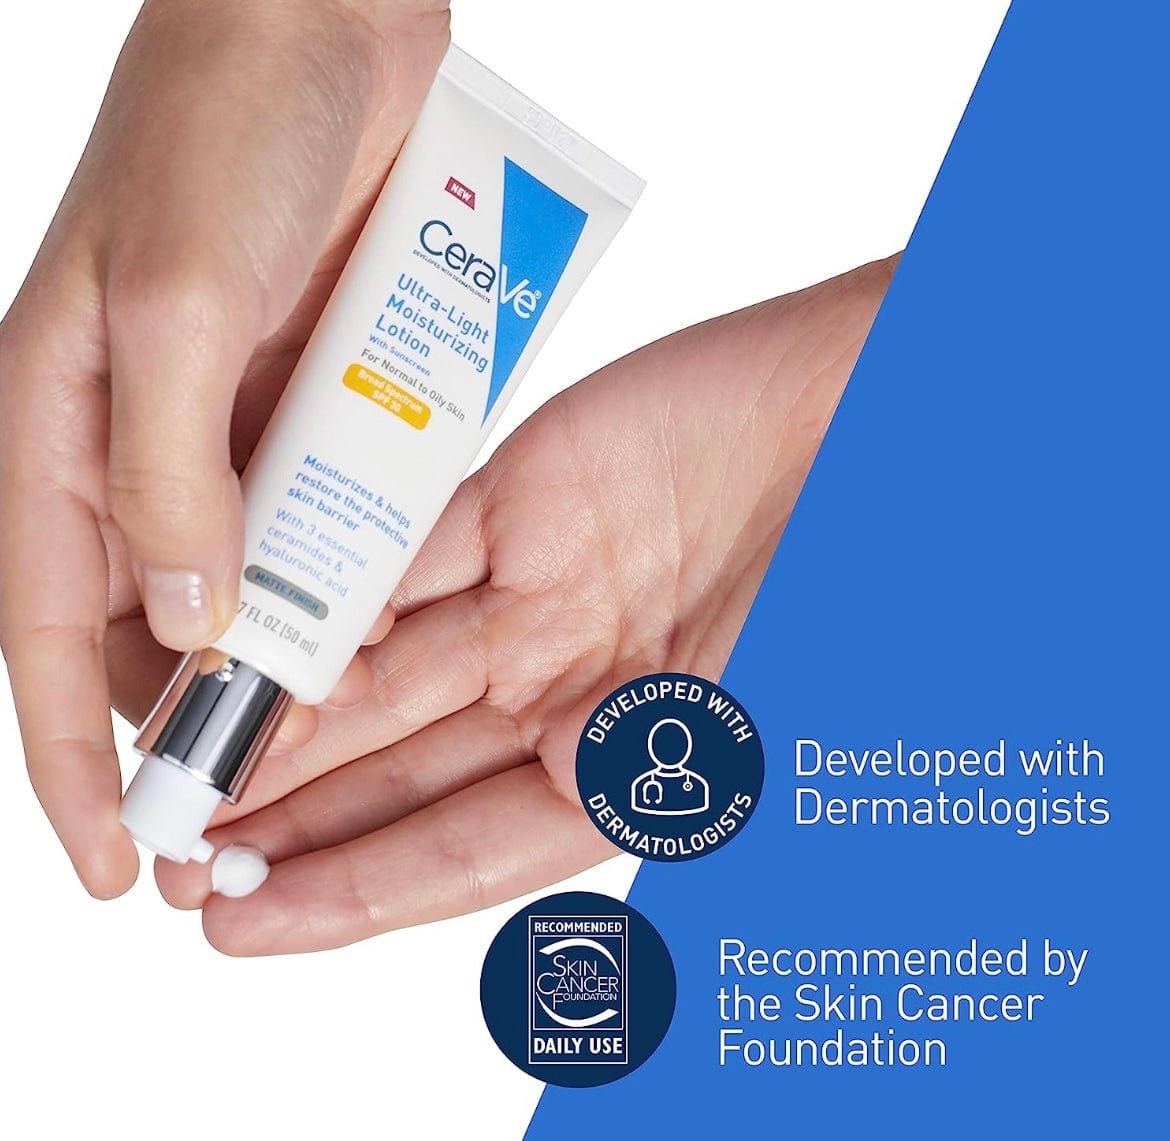 CeraVe - Hidratante facial con SPF 30 | Ultra-light moisturizing lotion